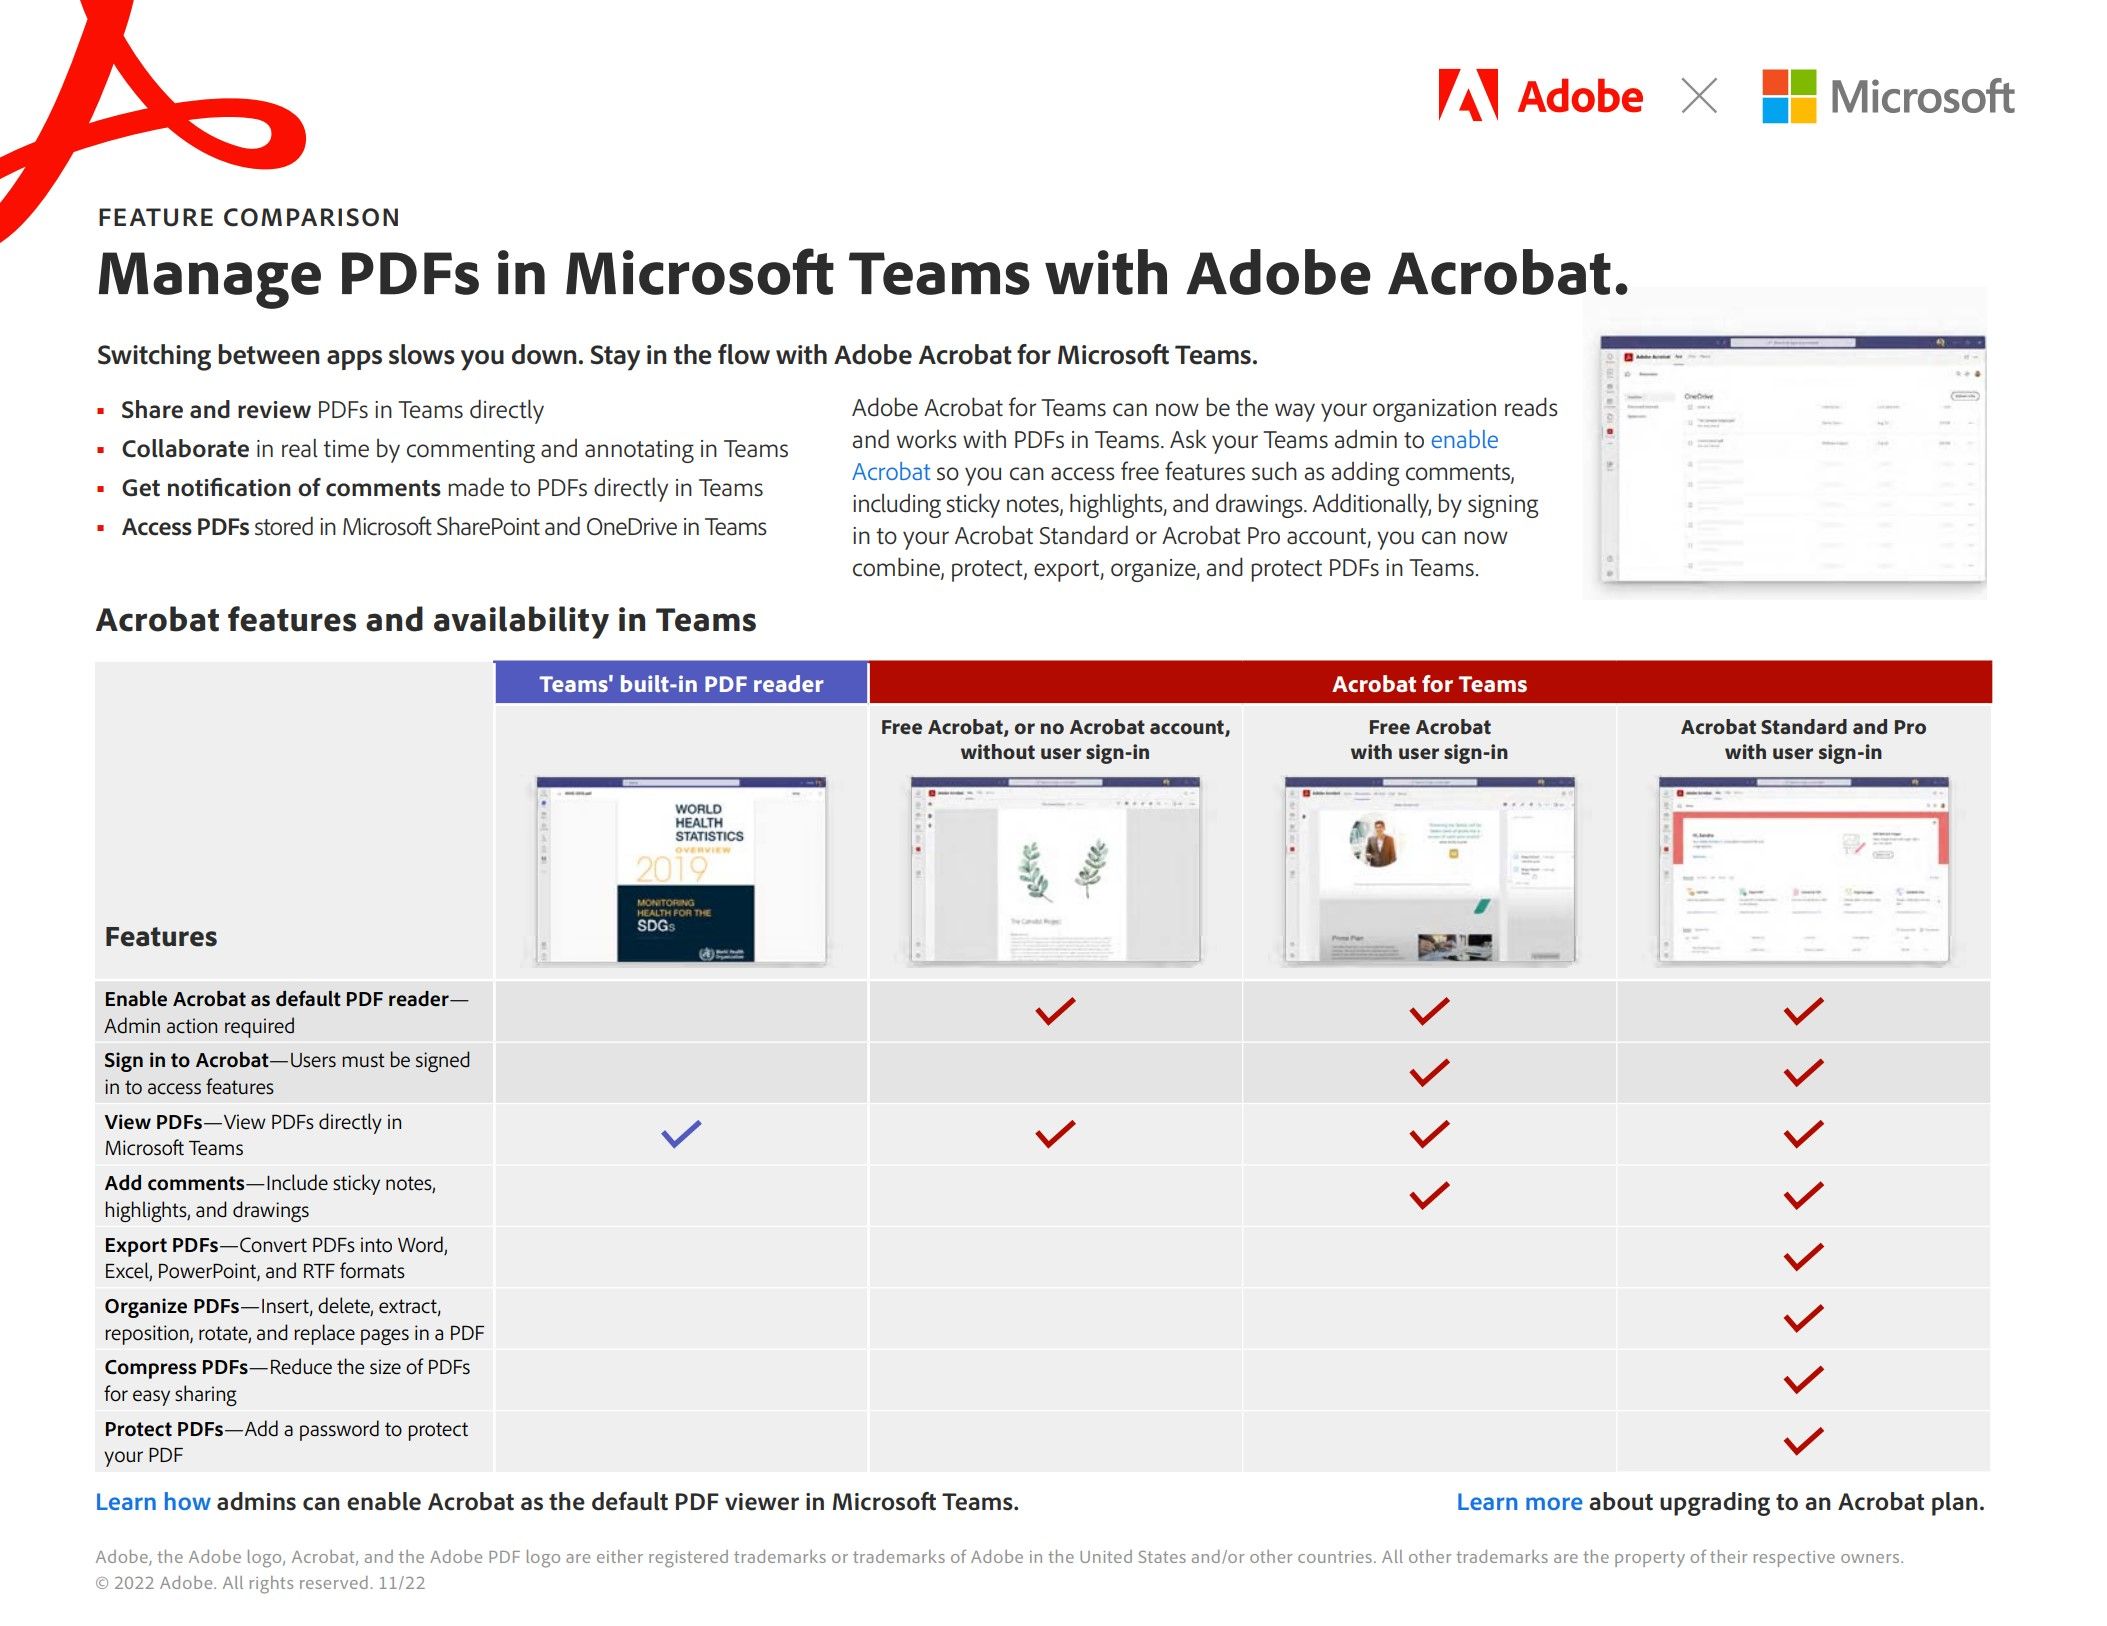 Adobe Acrobat streamlines the PDF experience in Microsoft Teams - Microsoft  Community Hub